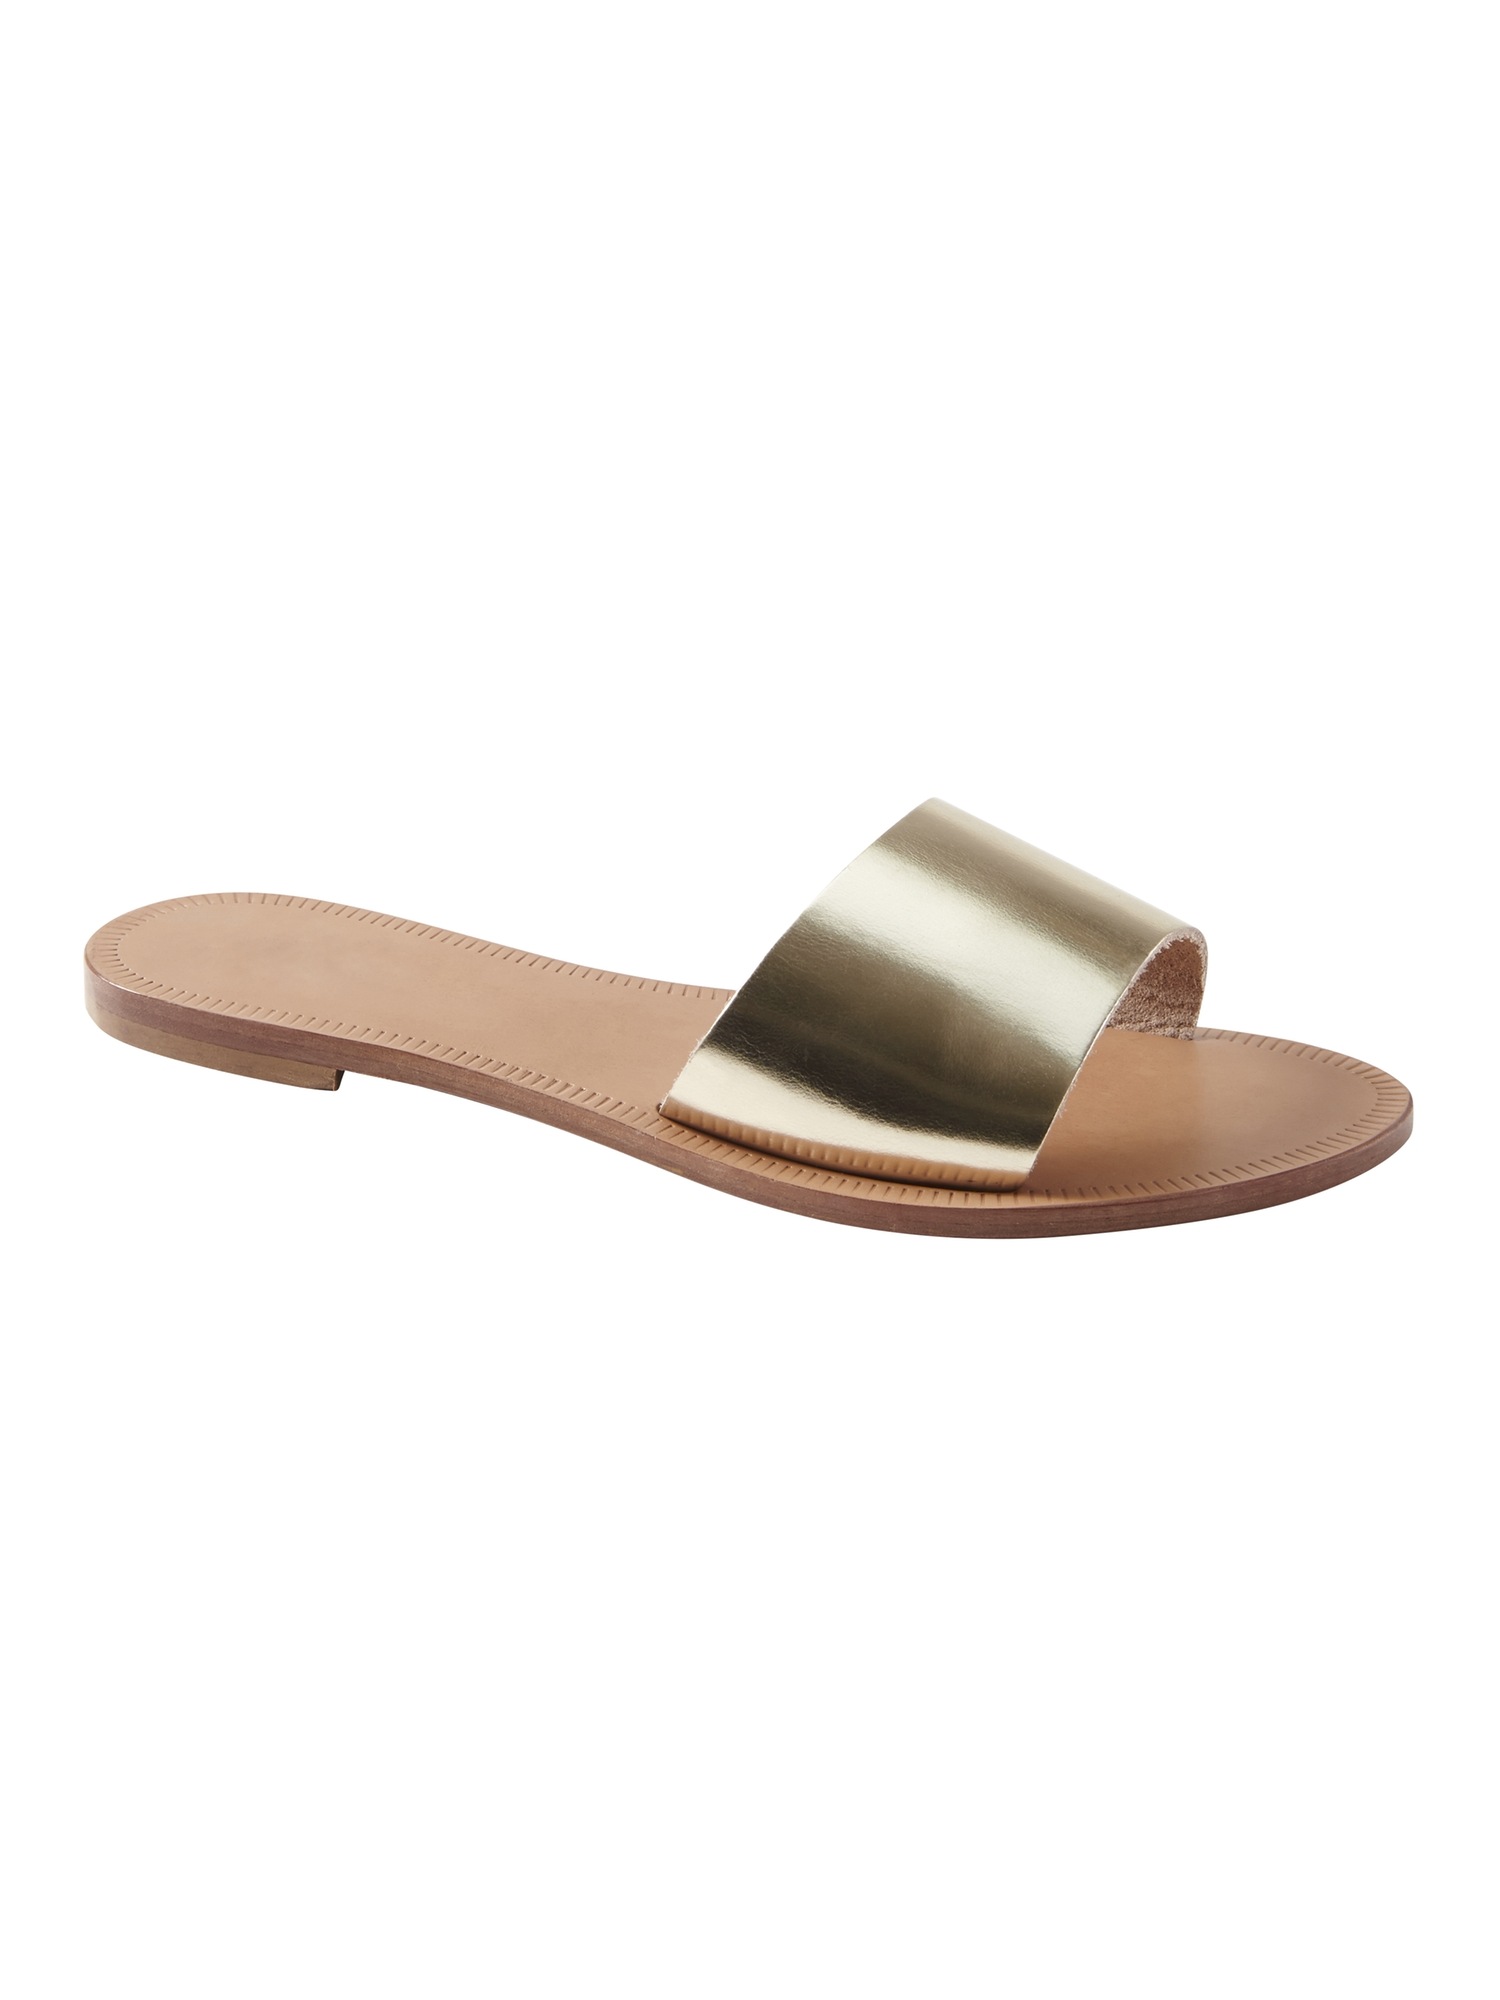 Joie &#124 Lacey Slide Metallic Sandal